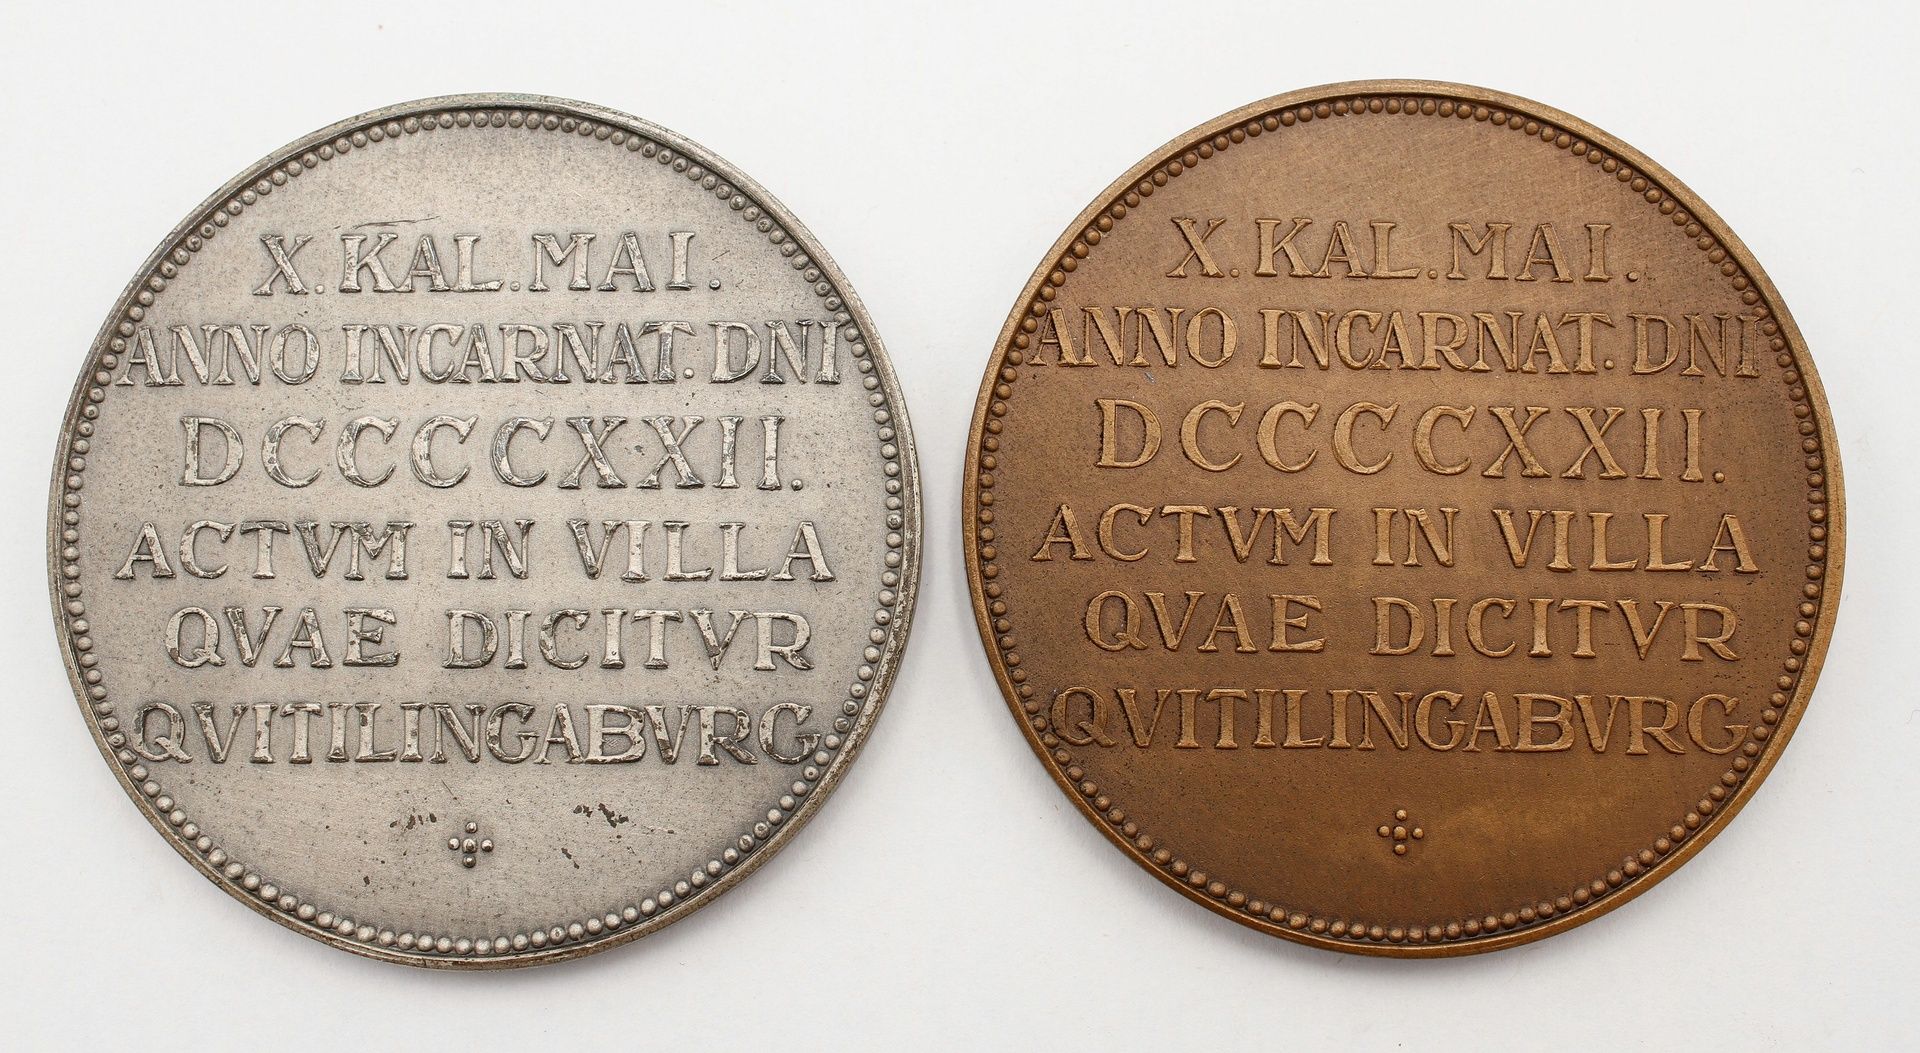 Zwei Quedlinburg-Medaillen 1922 - Image 2 of 2